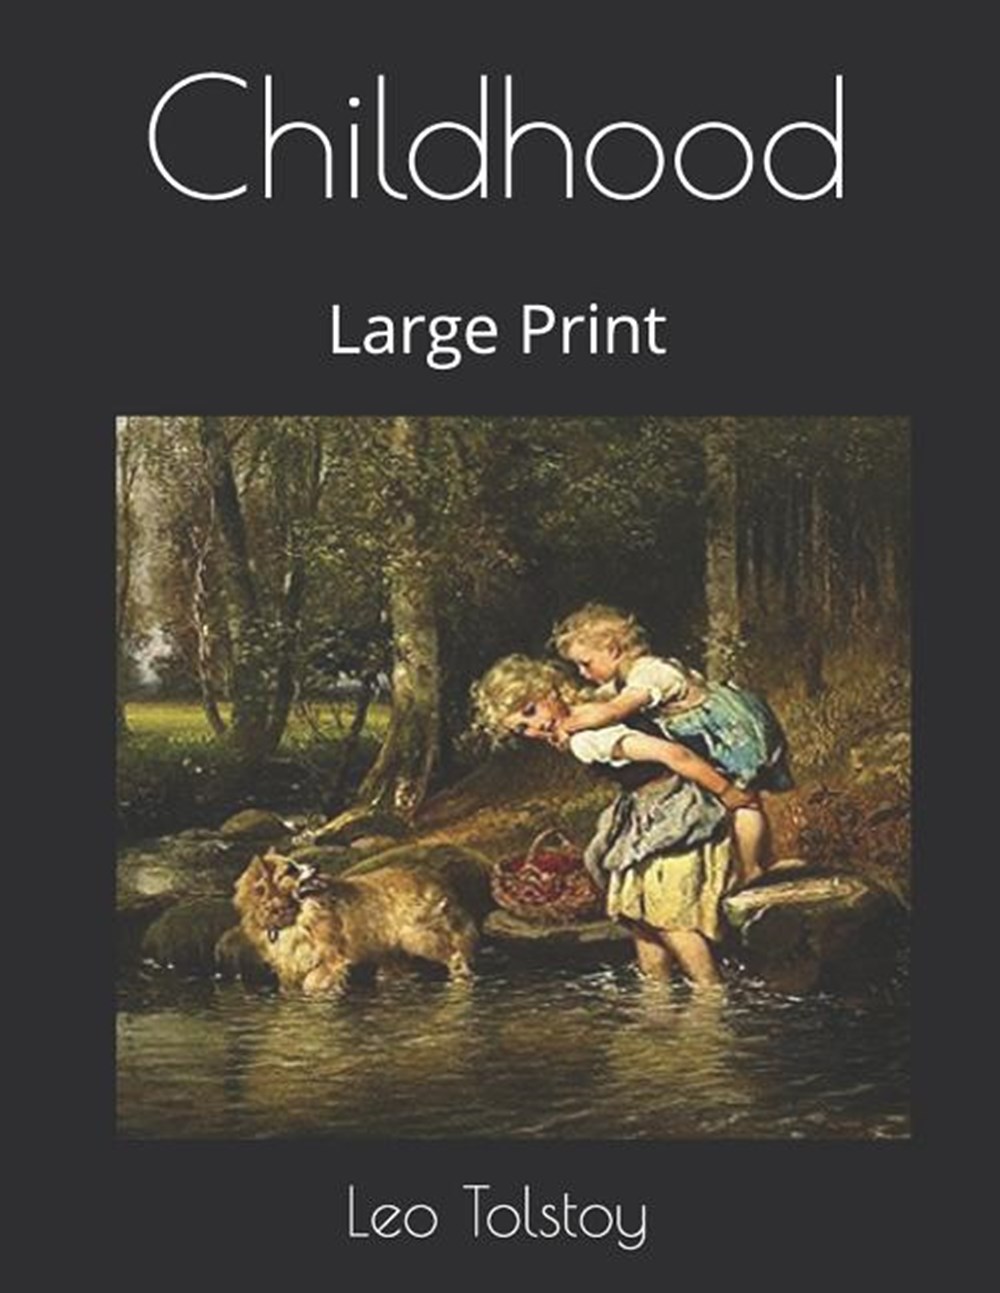 Childhood Large Print